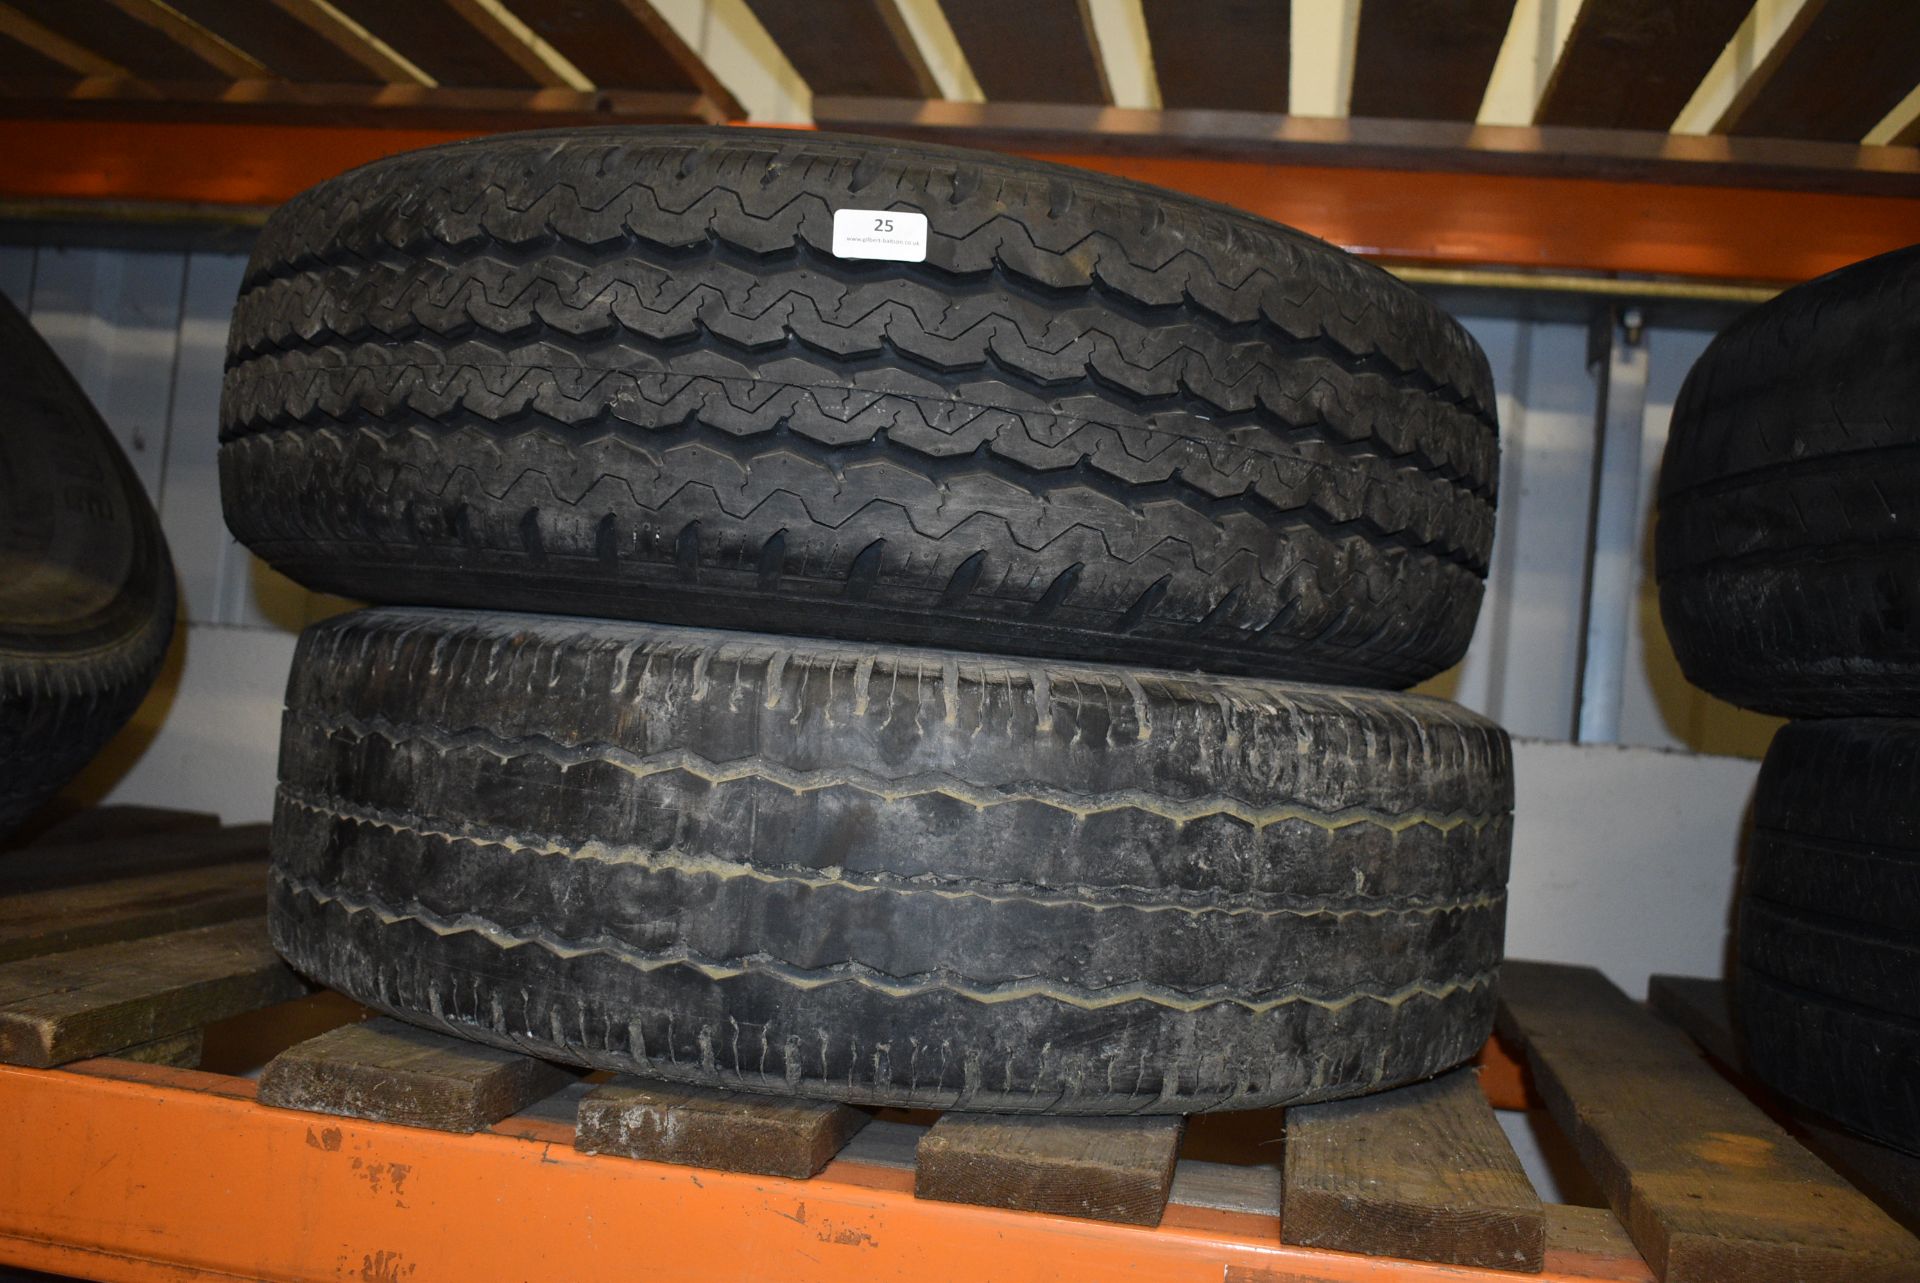 *Two 215/75R16c Tyres on Five Stud Steel Rims